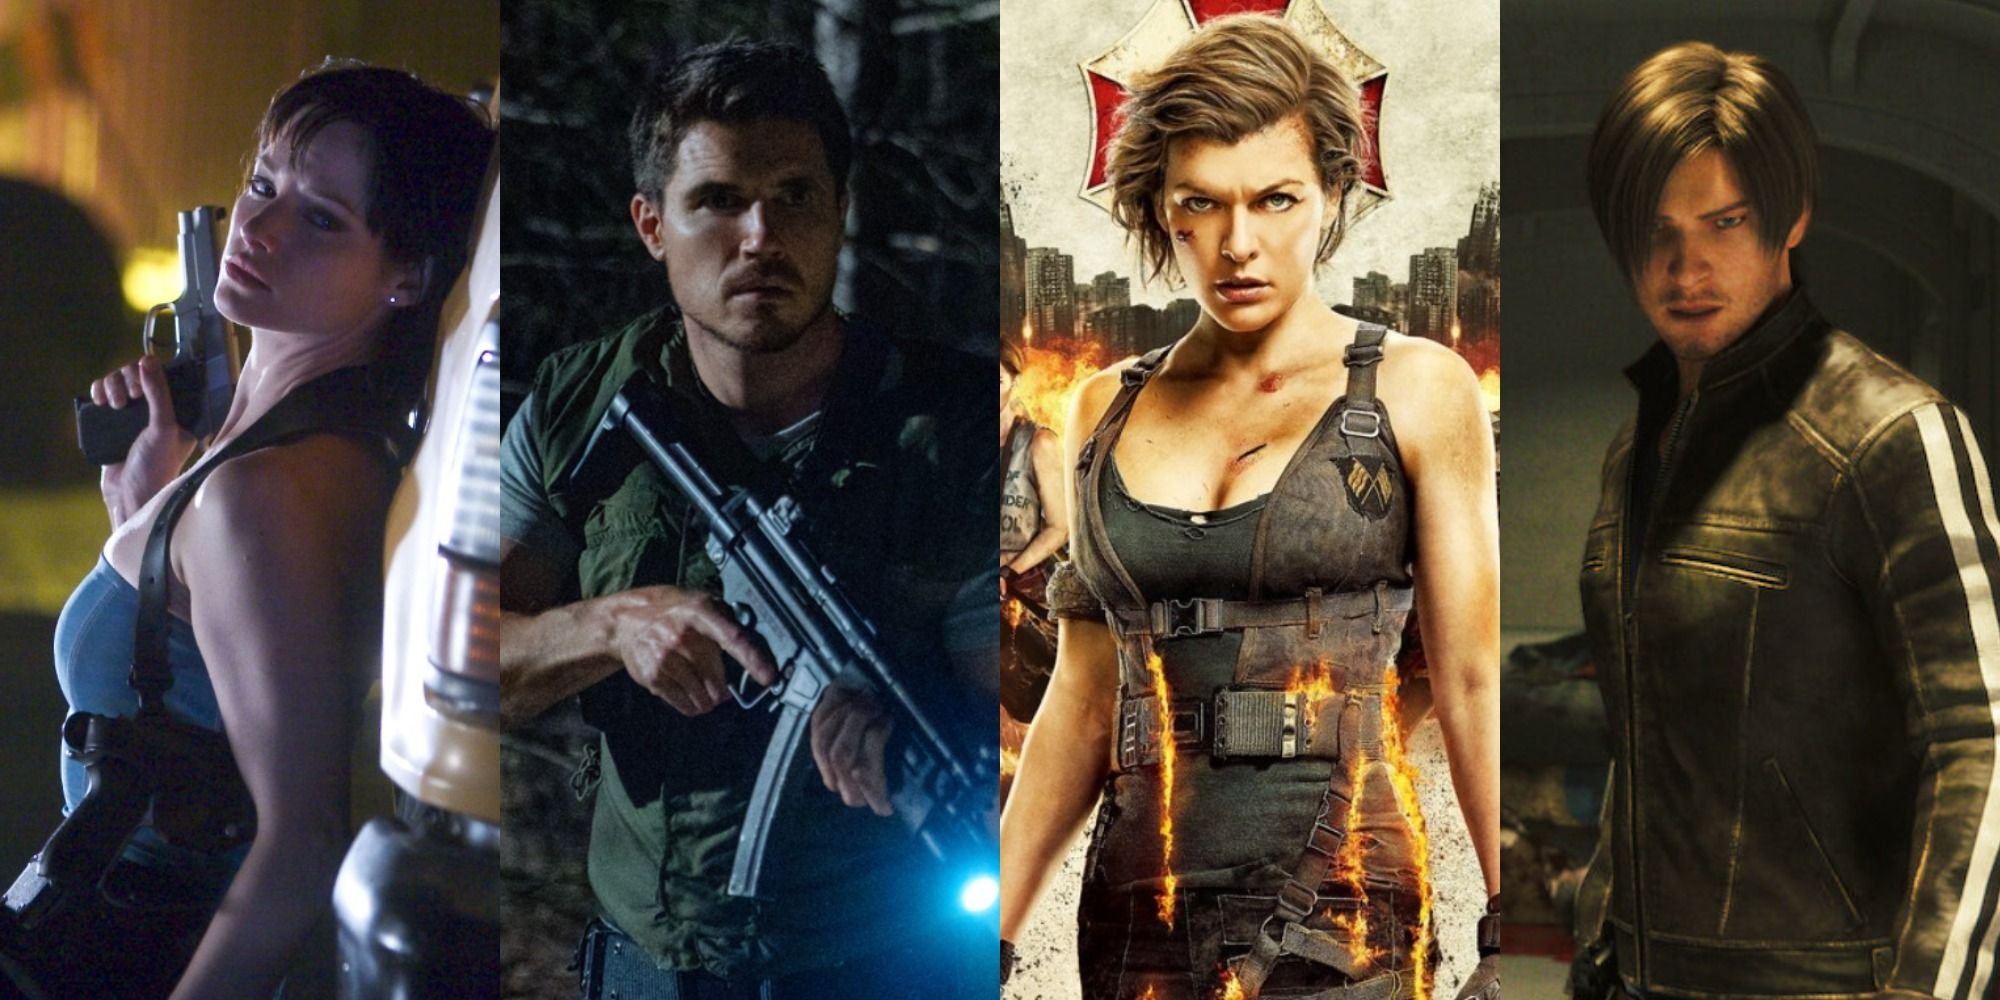 Resident Evil: The Final Chapter (2016) - IMDb